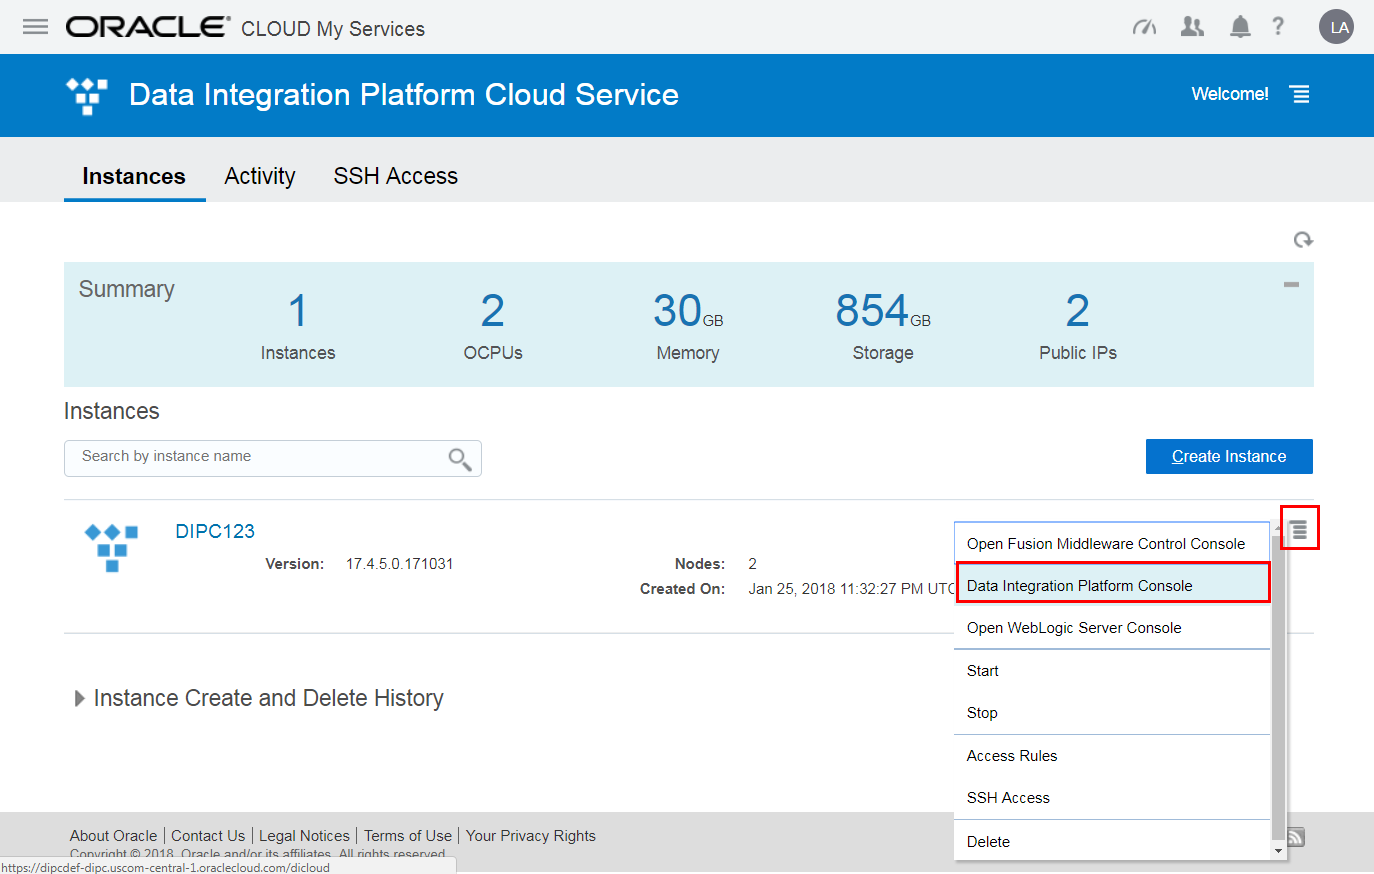 Schema van Oracle Data Integration Platform Cloud.